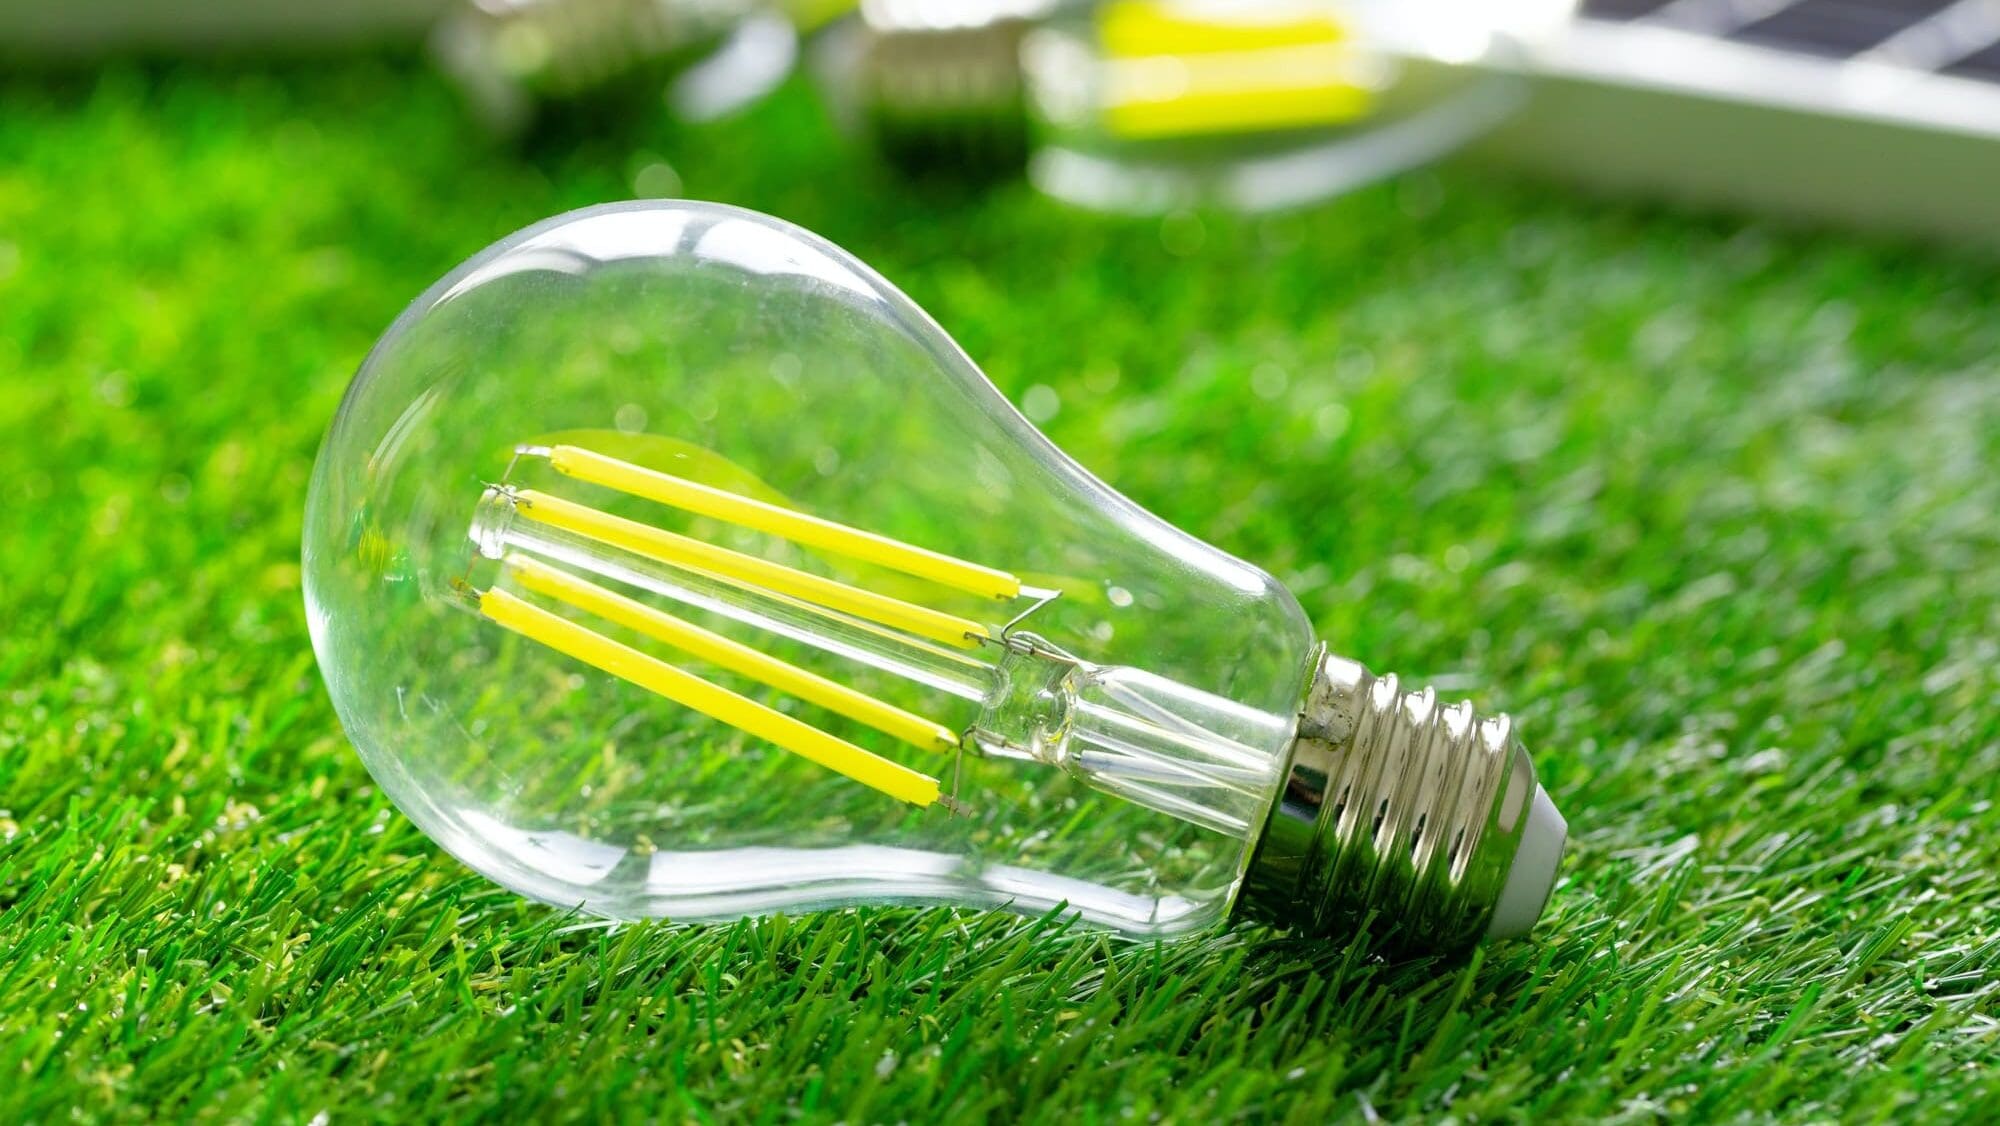 Energy efficient light bulb lying on grass